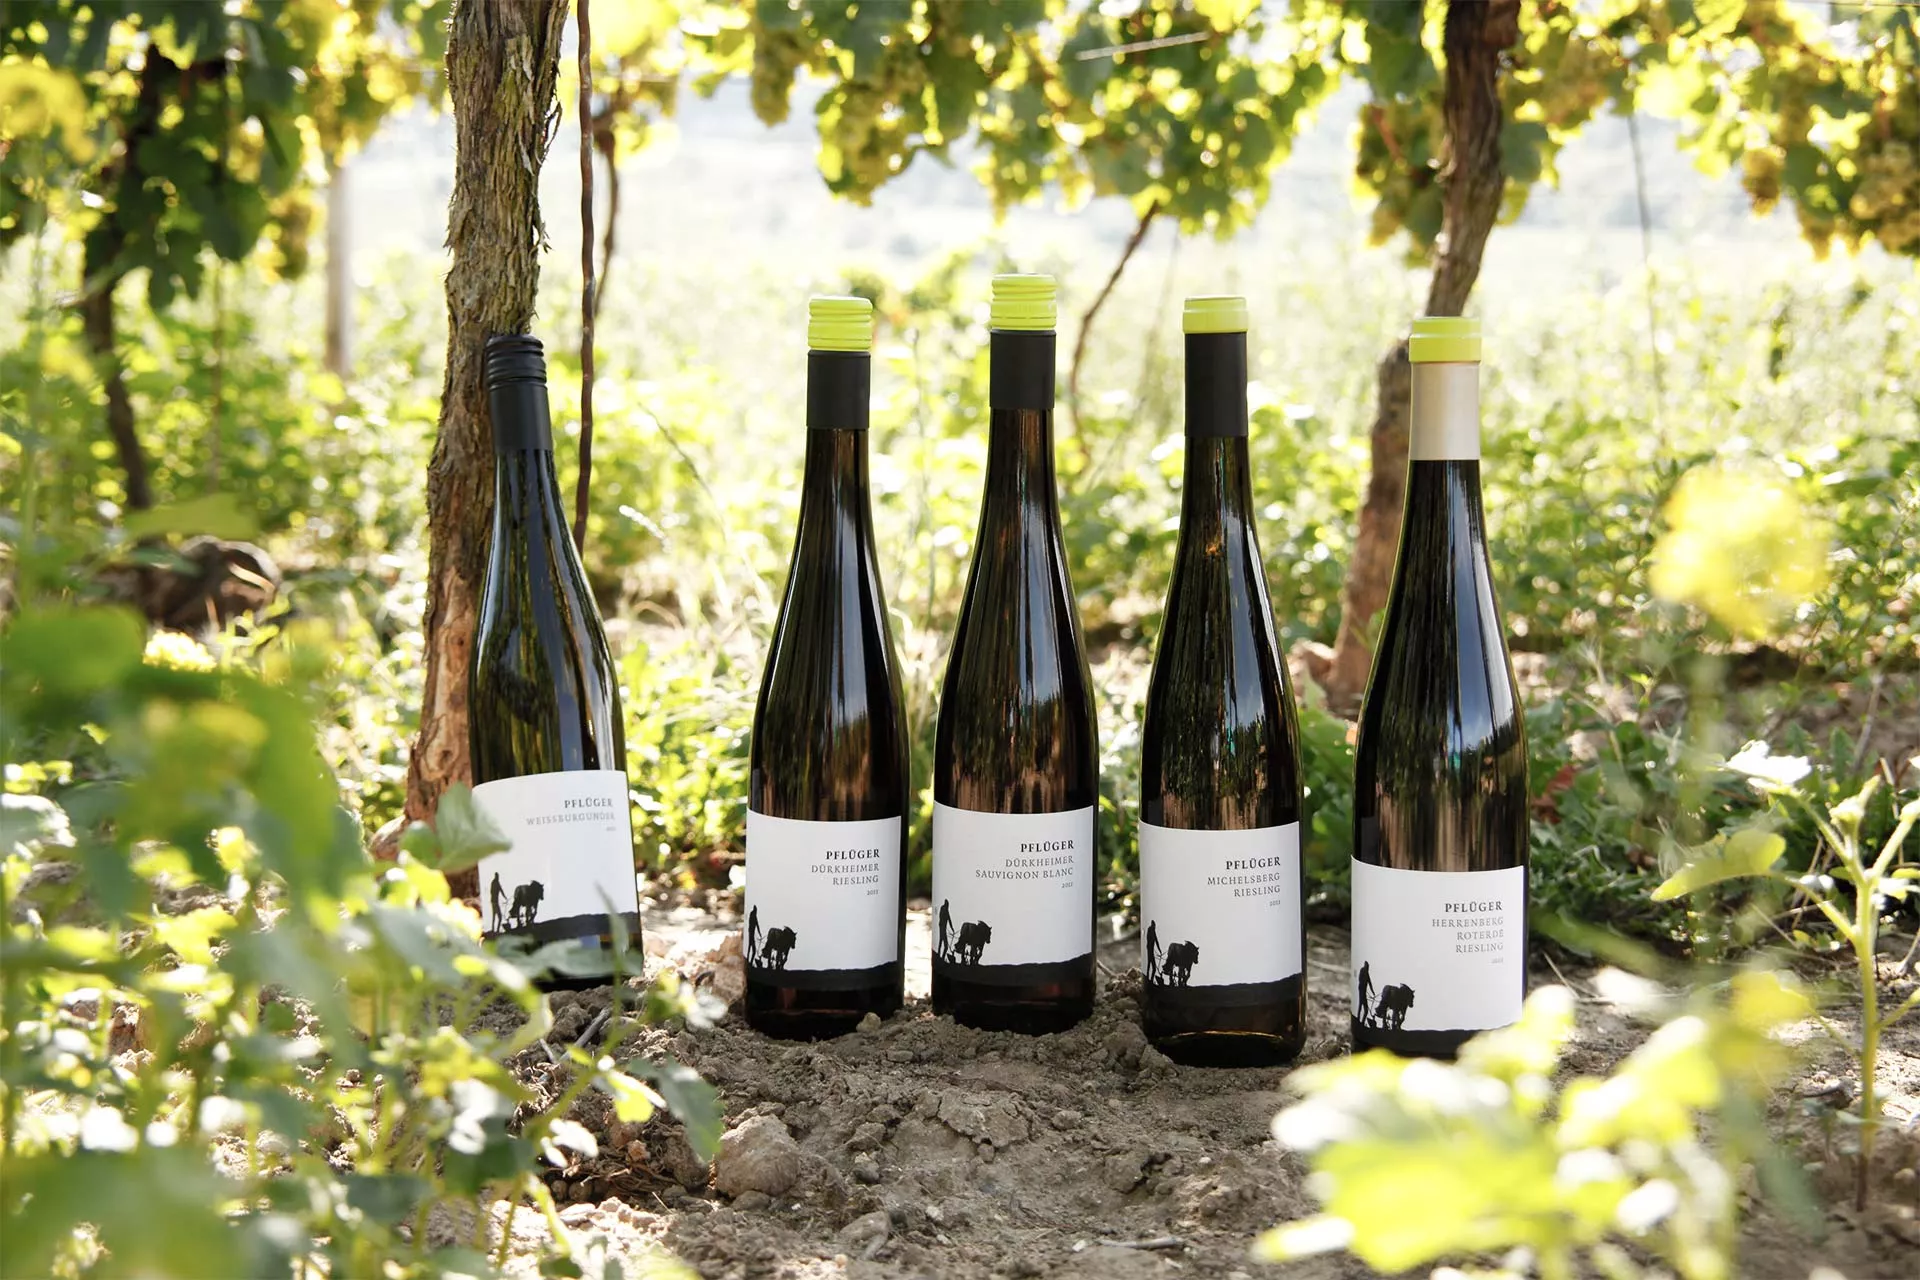 Drei Herren Winery in Germany, Europe | Wineries - Rated 0.8